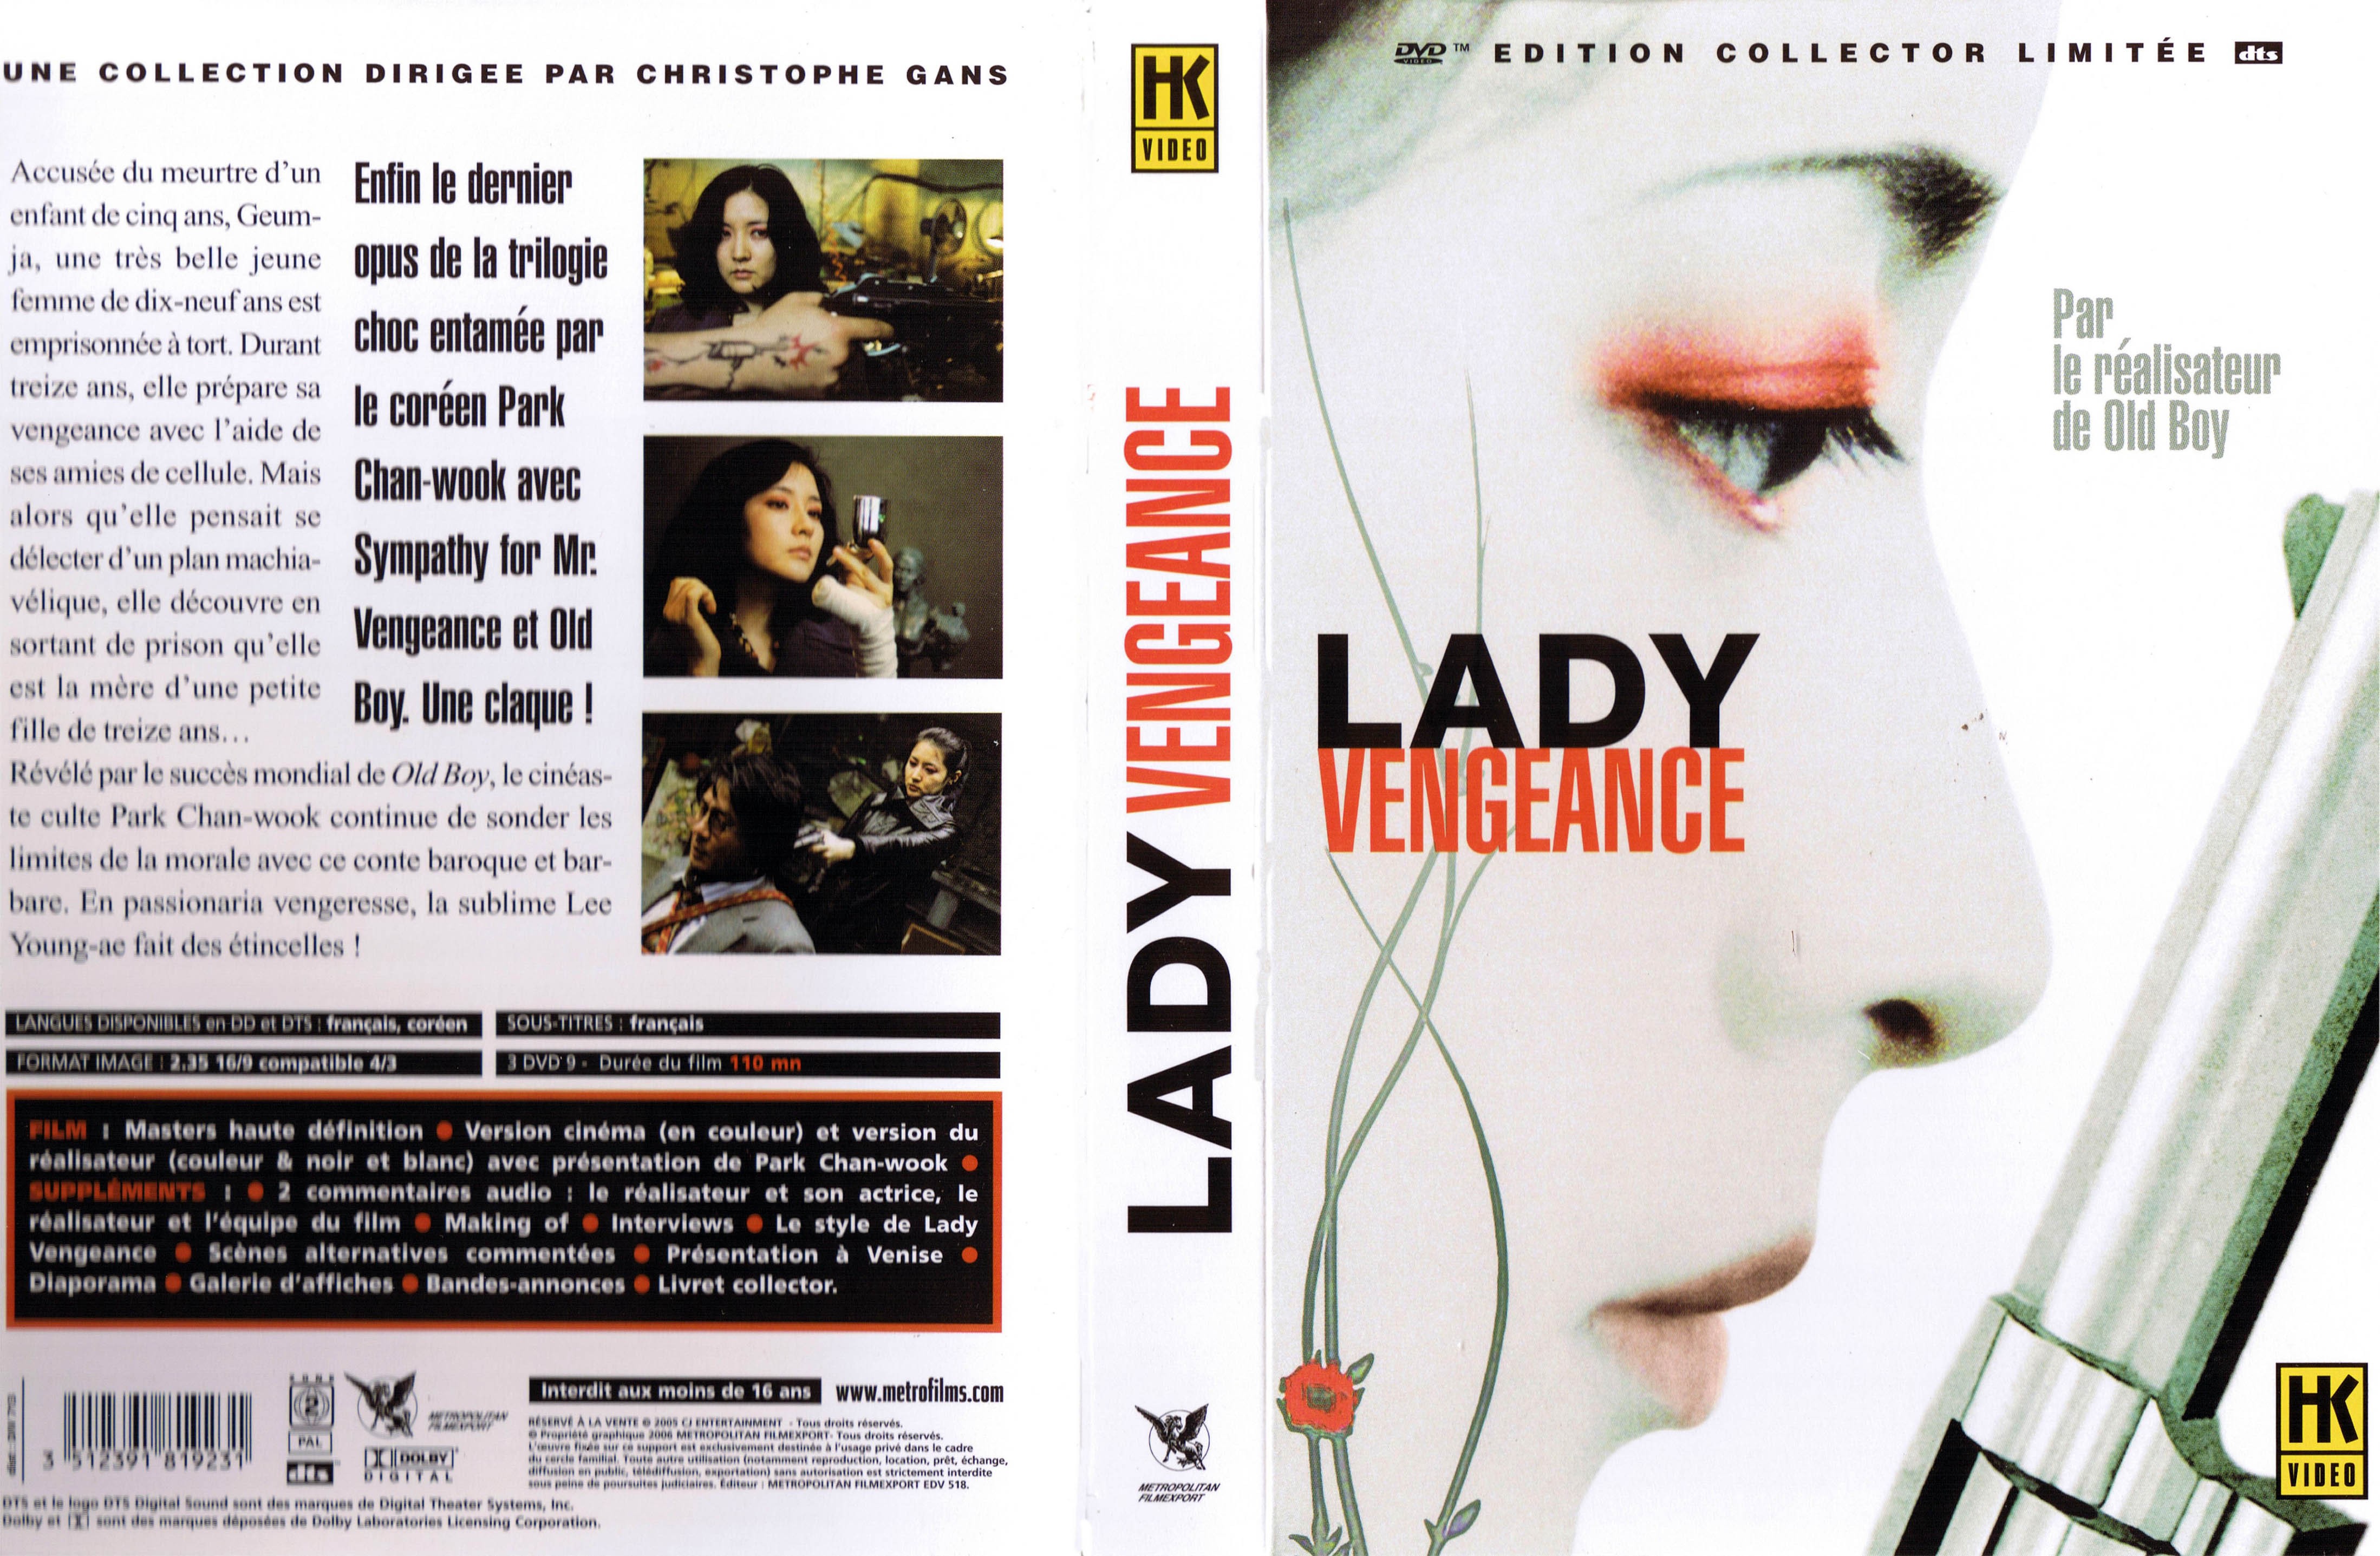 Jaquette DVD Lady vengeance v2